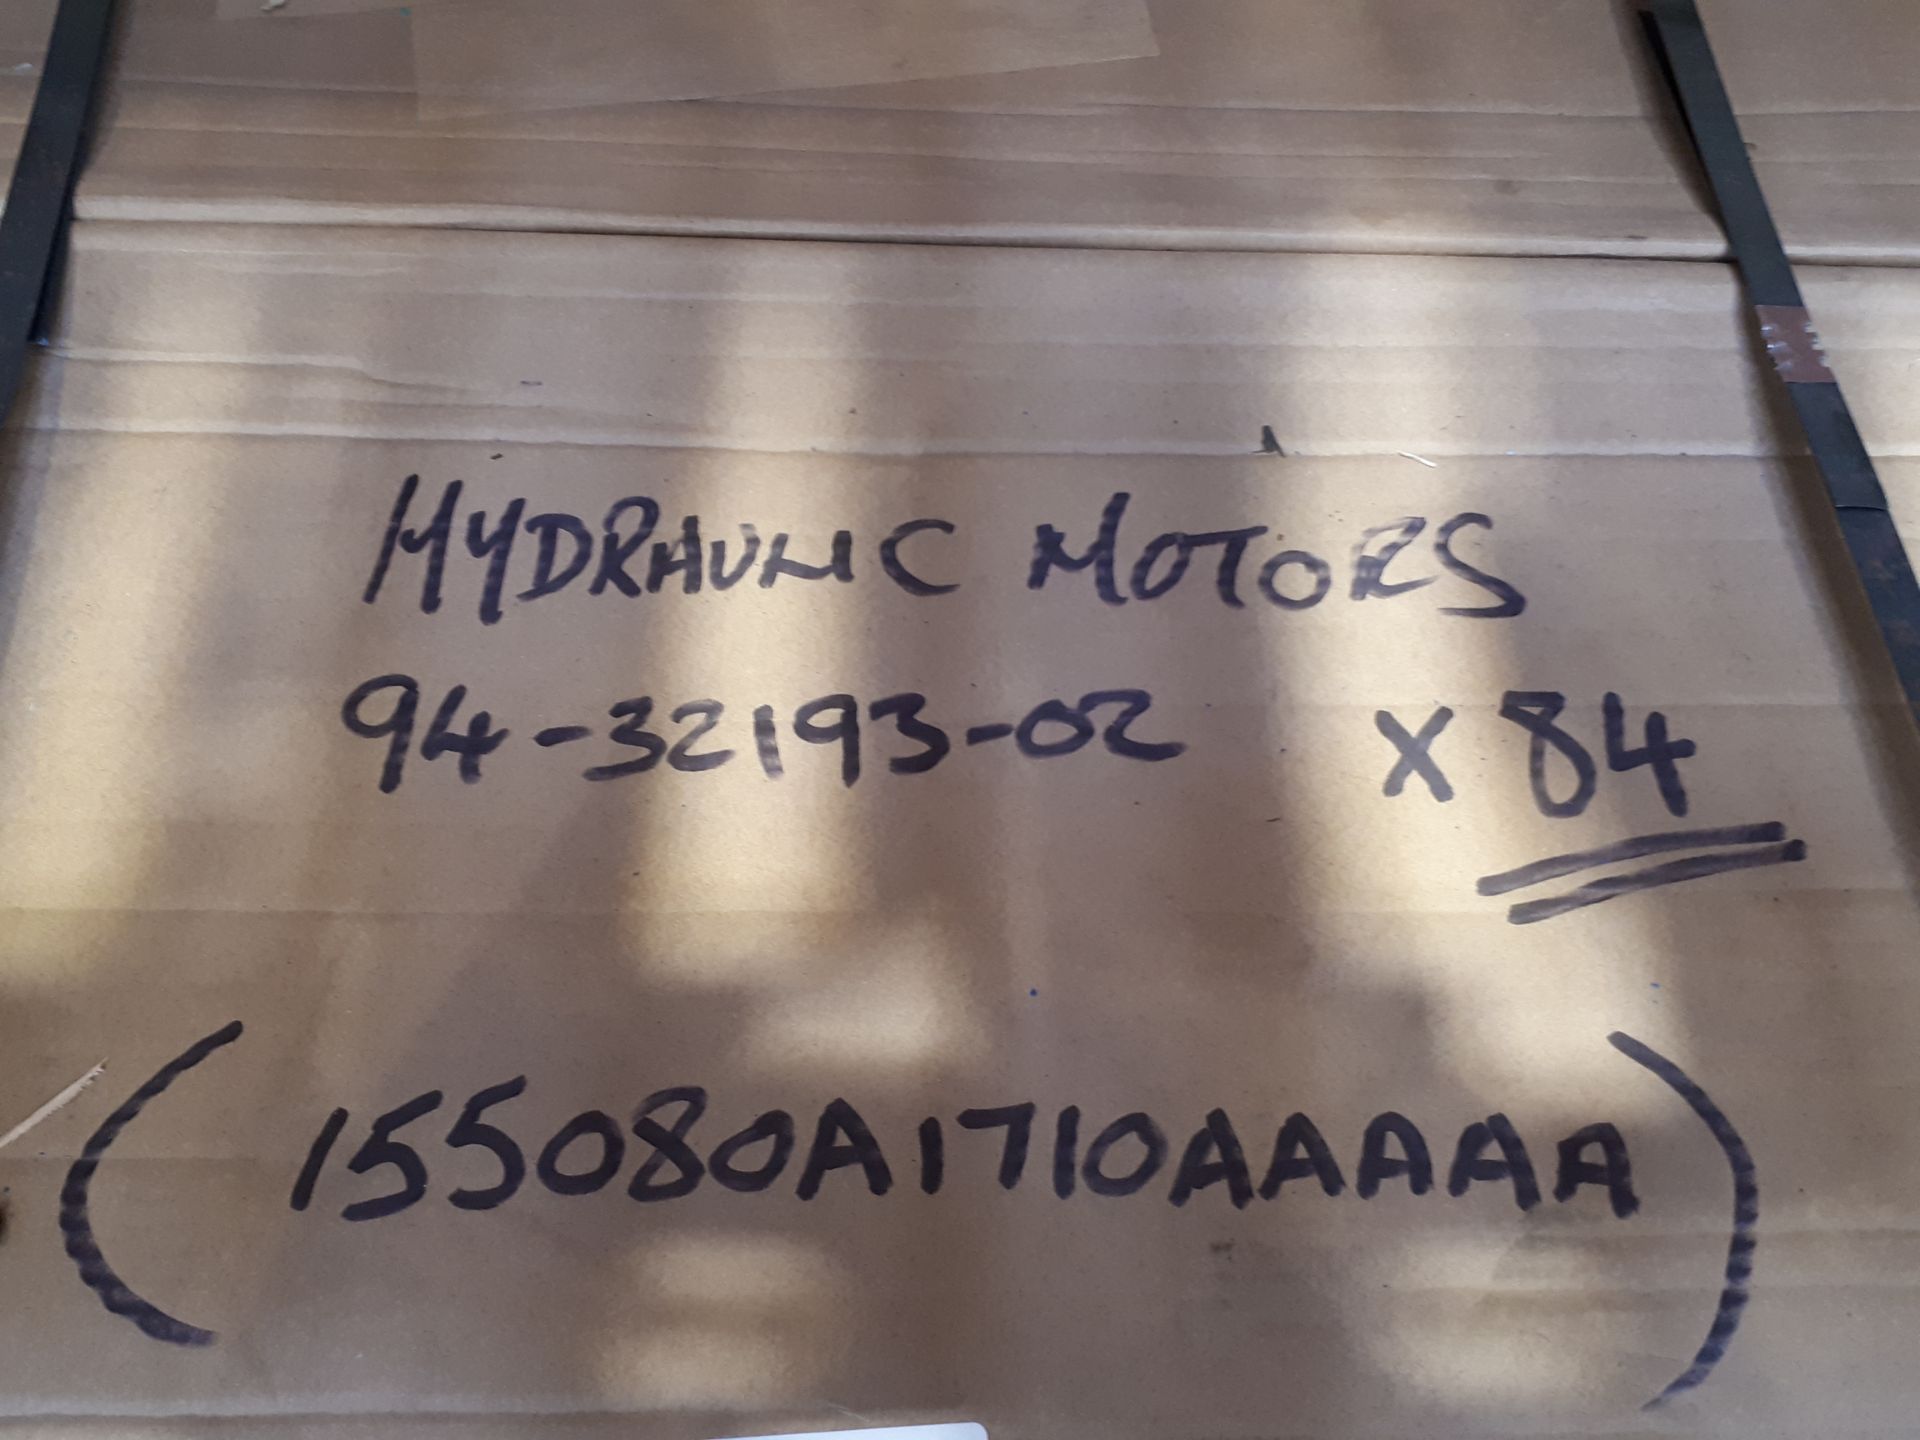 (84) Hydraulic motors, Code. Danfoss 155080A1710AAAA - Image 2 of 2